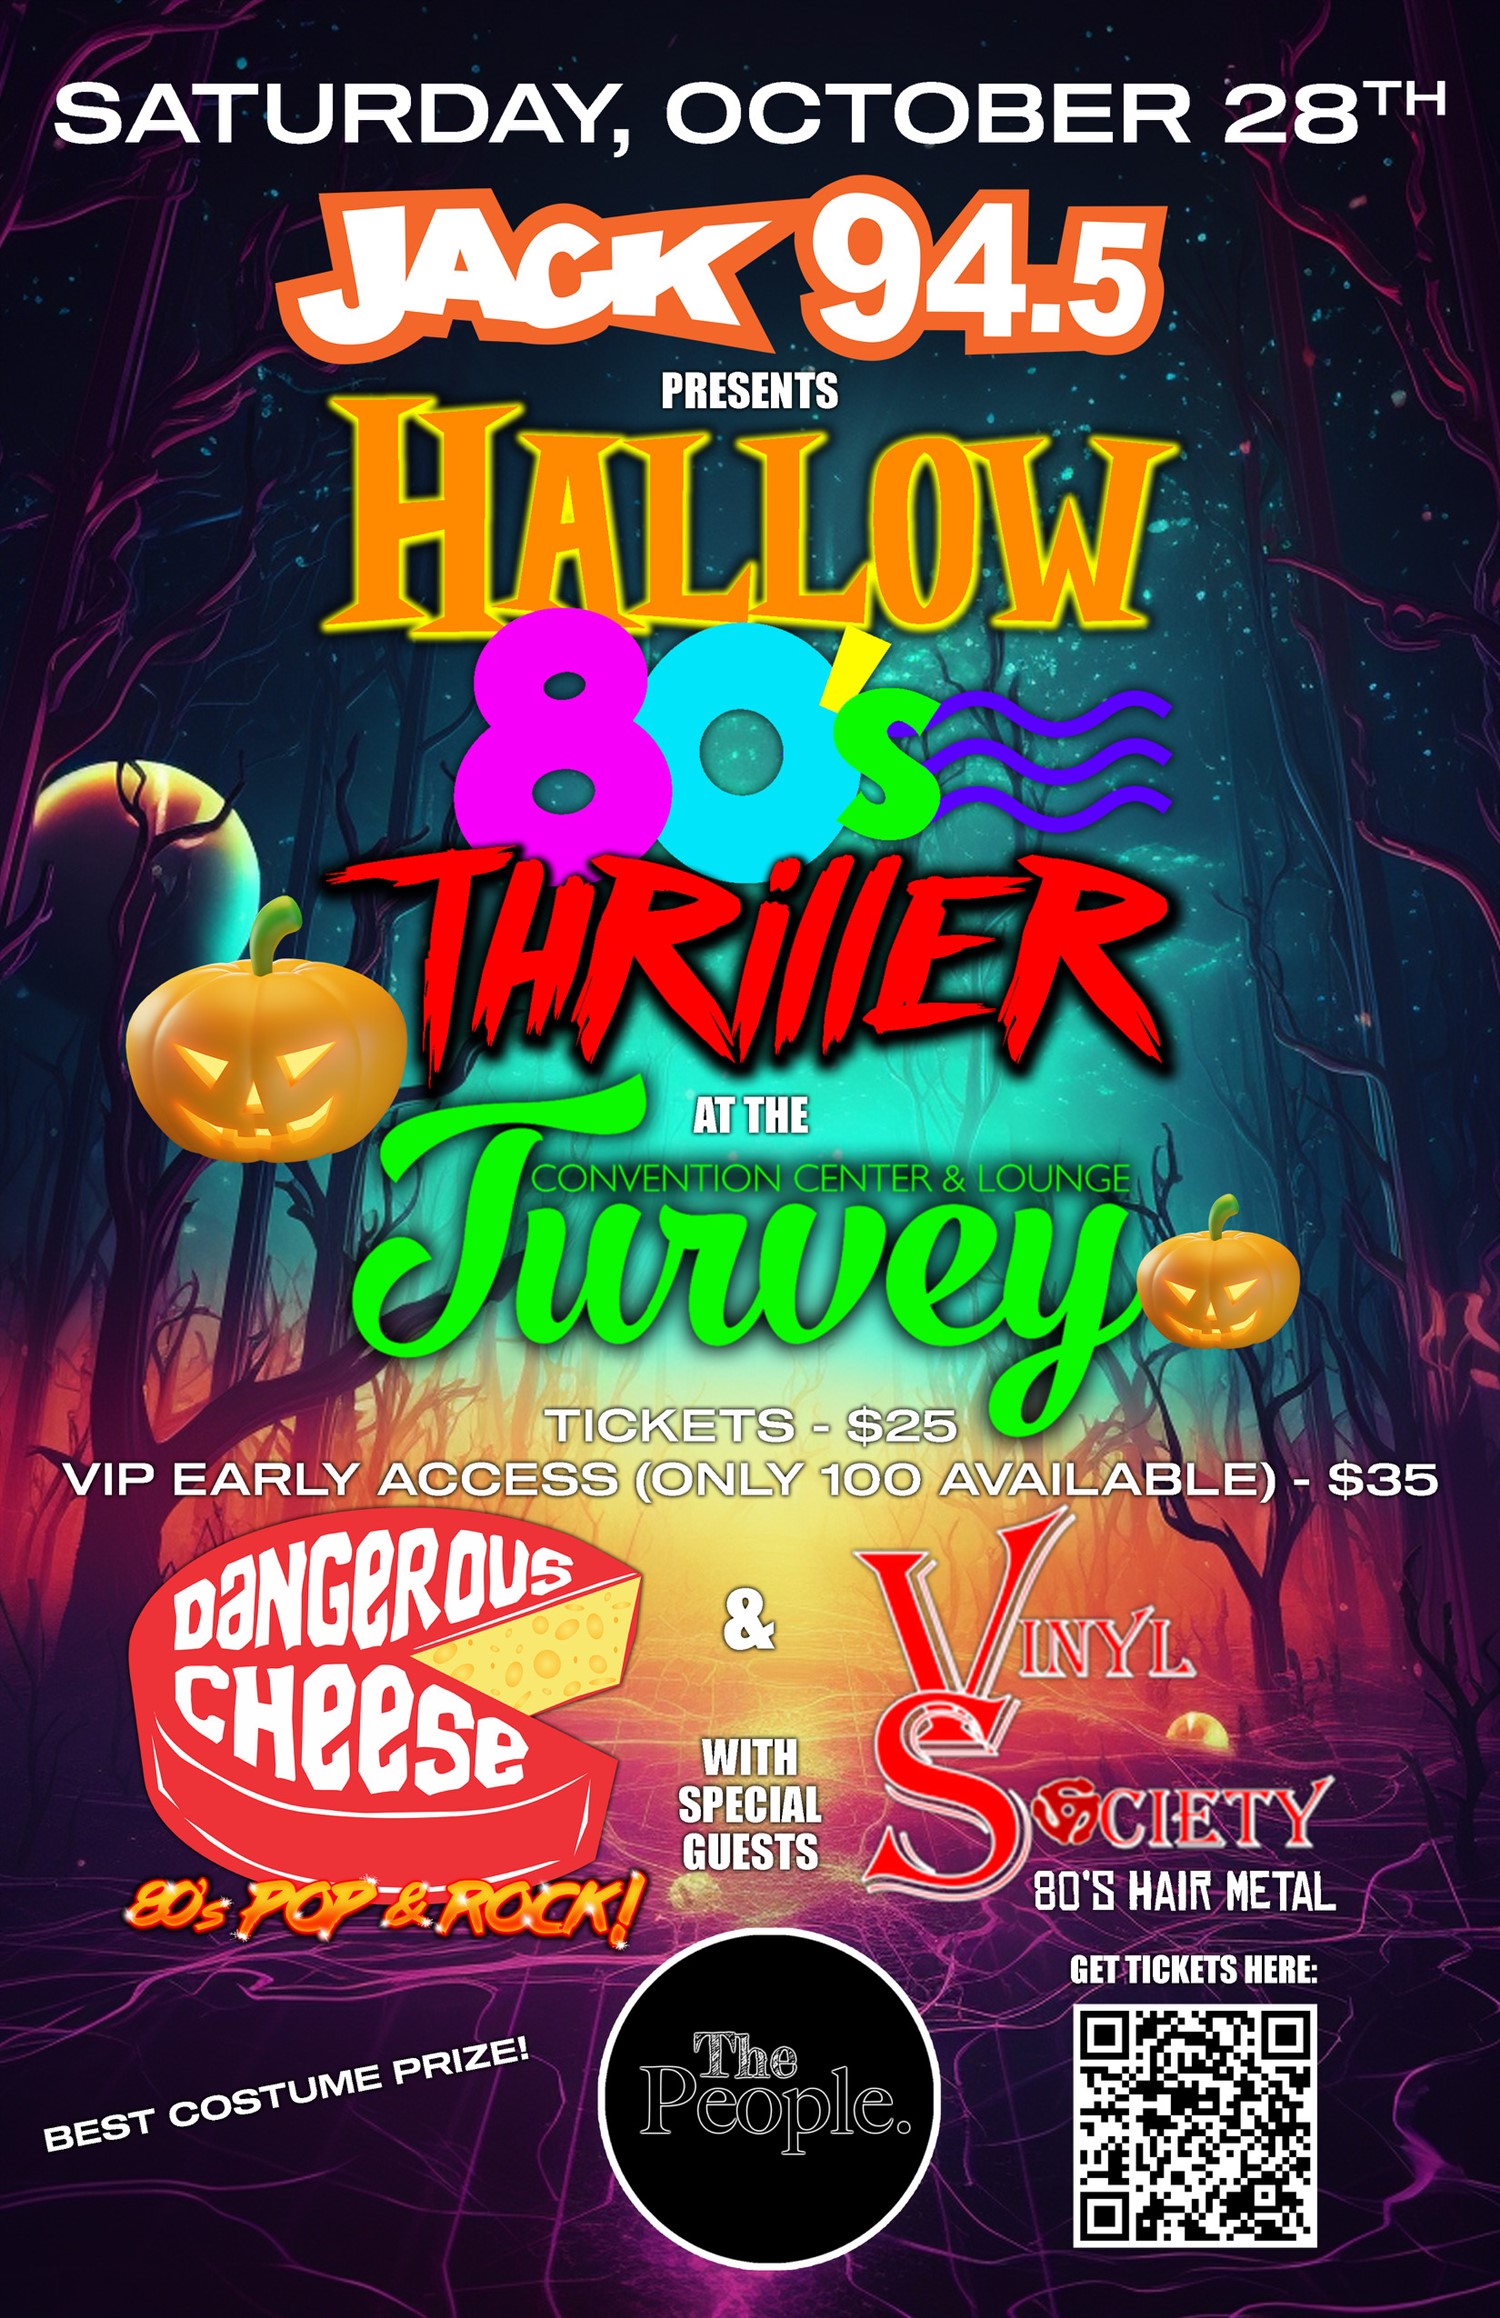 Hallow 80s Thriller Presented by Jack 94.5 FM Vinyl Society, Dangerous Cheese & The People on oct. 28, 19:30@TURVEY Center - Achetez des billets et obtenez des informations surTurvey Convention Center 